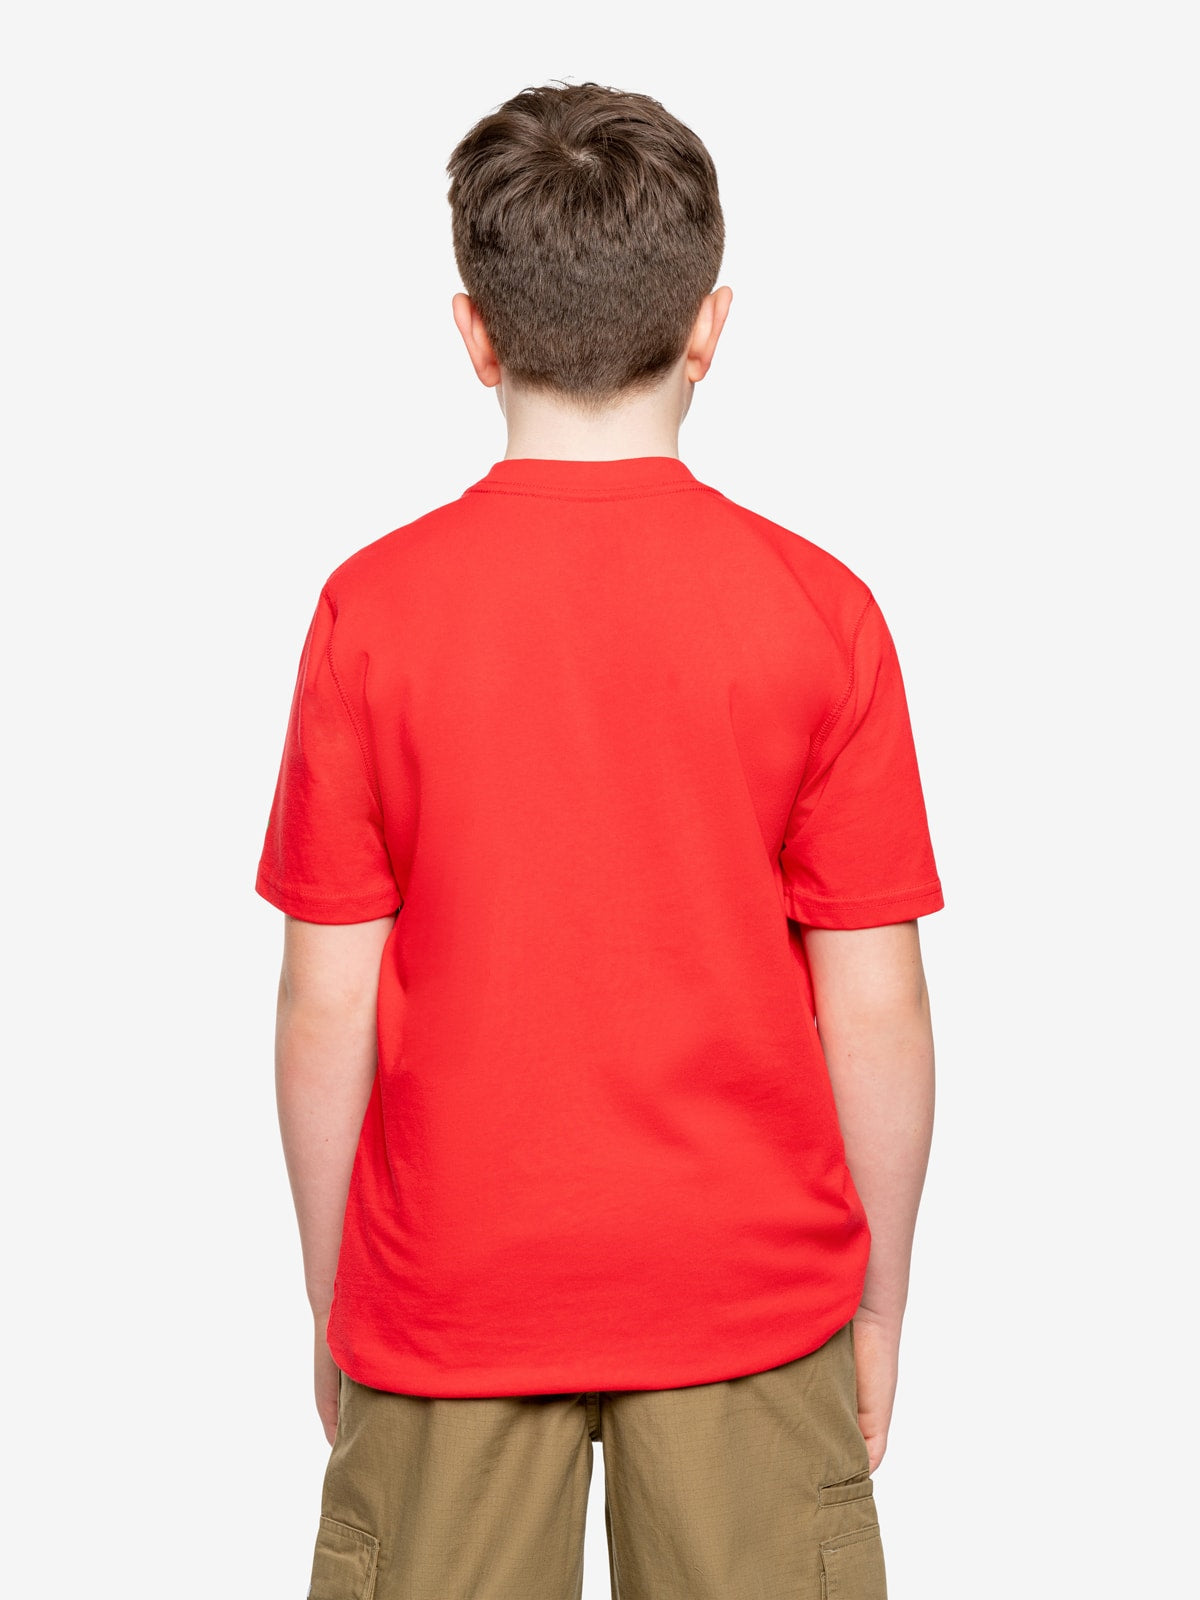 Insect Shield Youth UPF Dri-Balance Short Sleeve T-Shirt